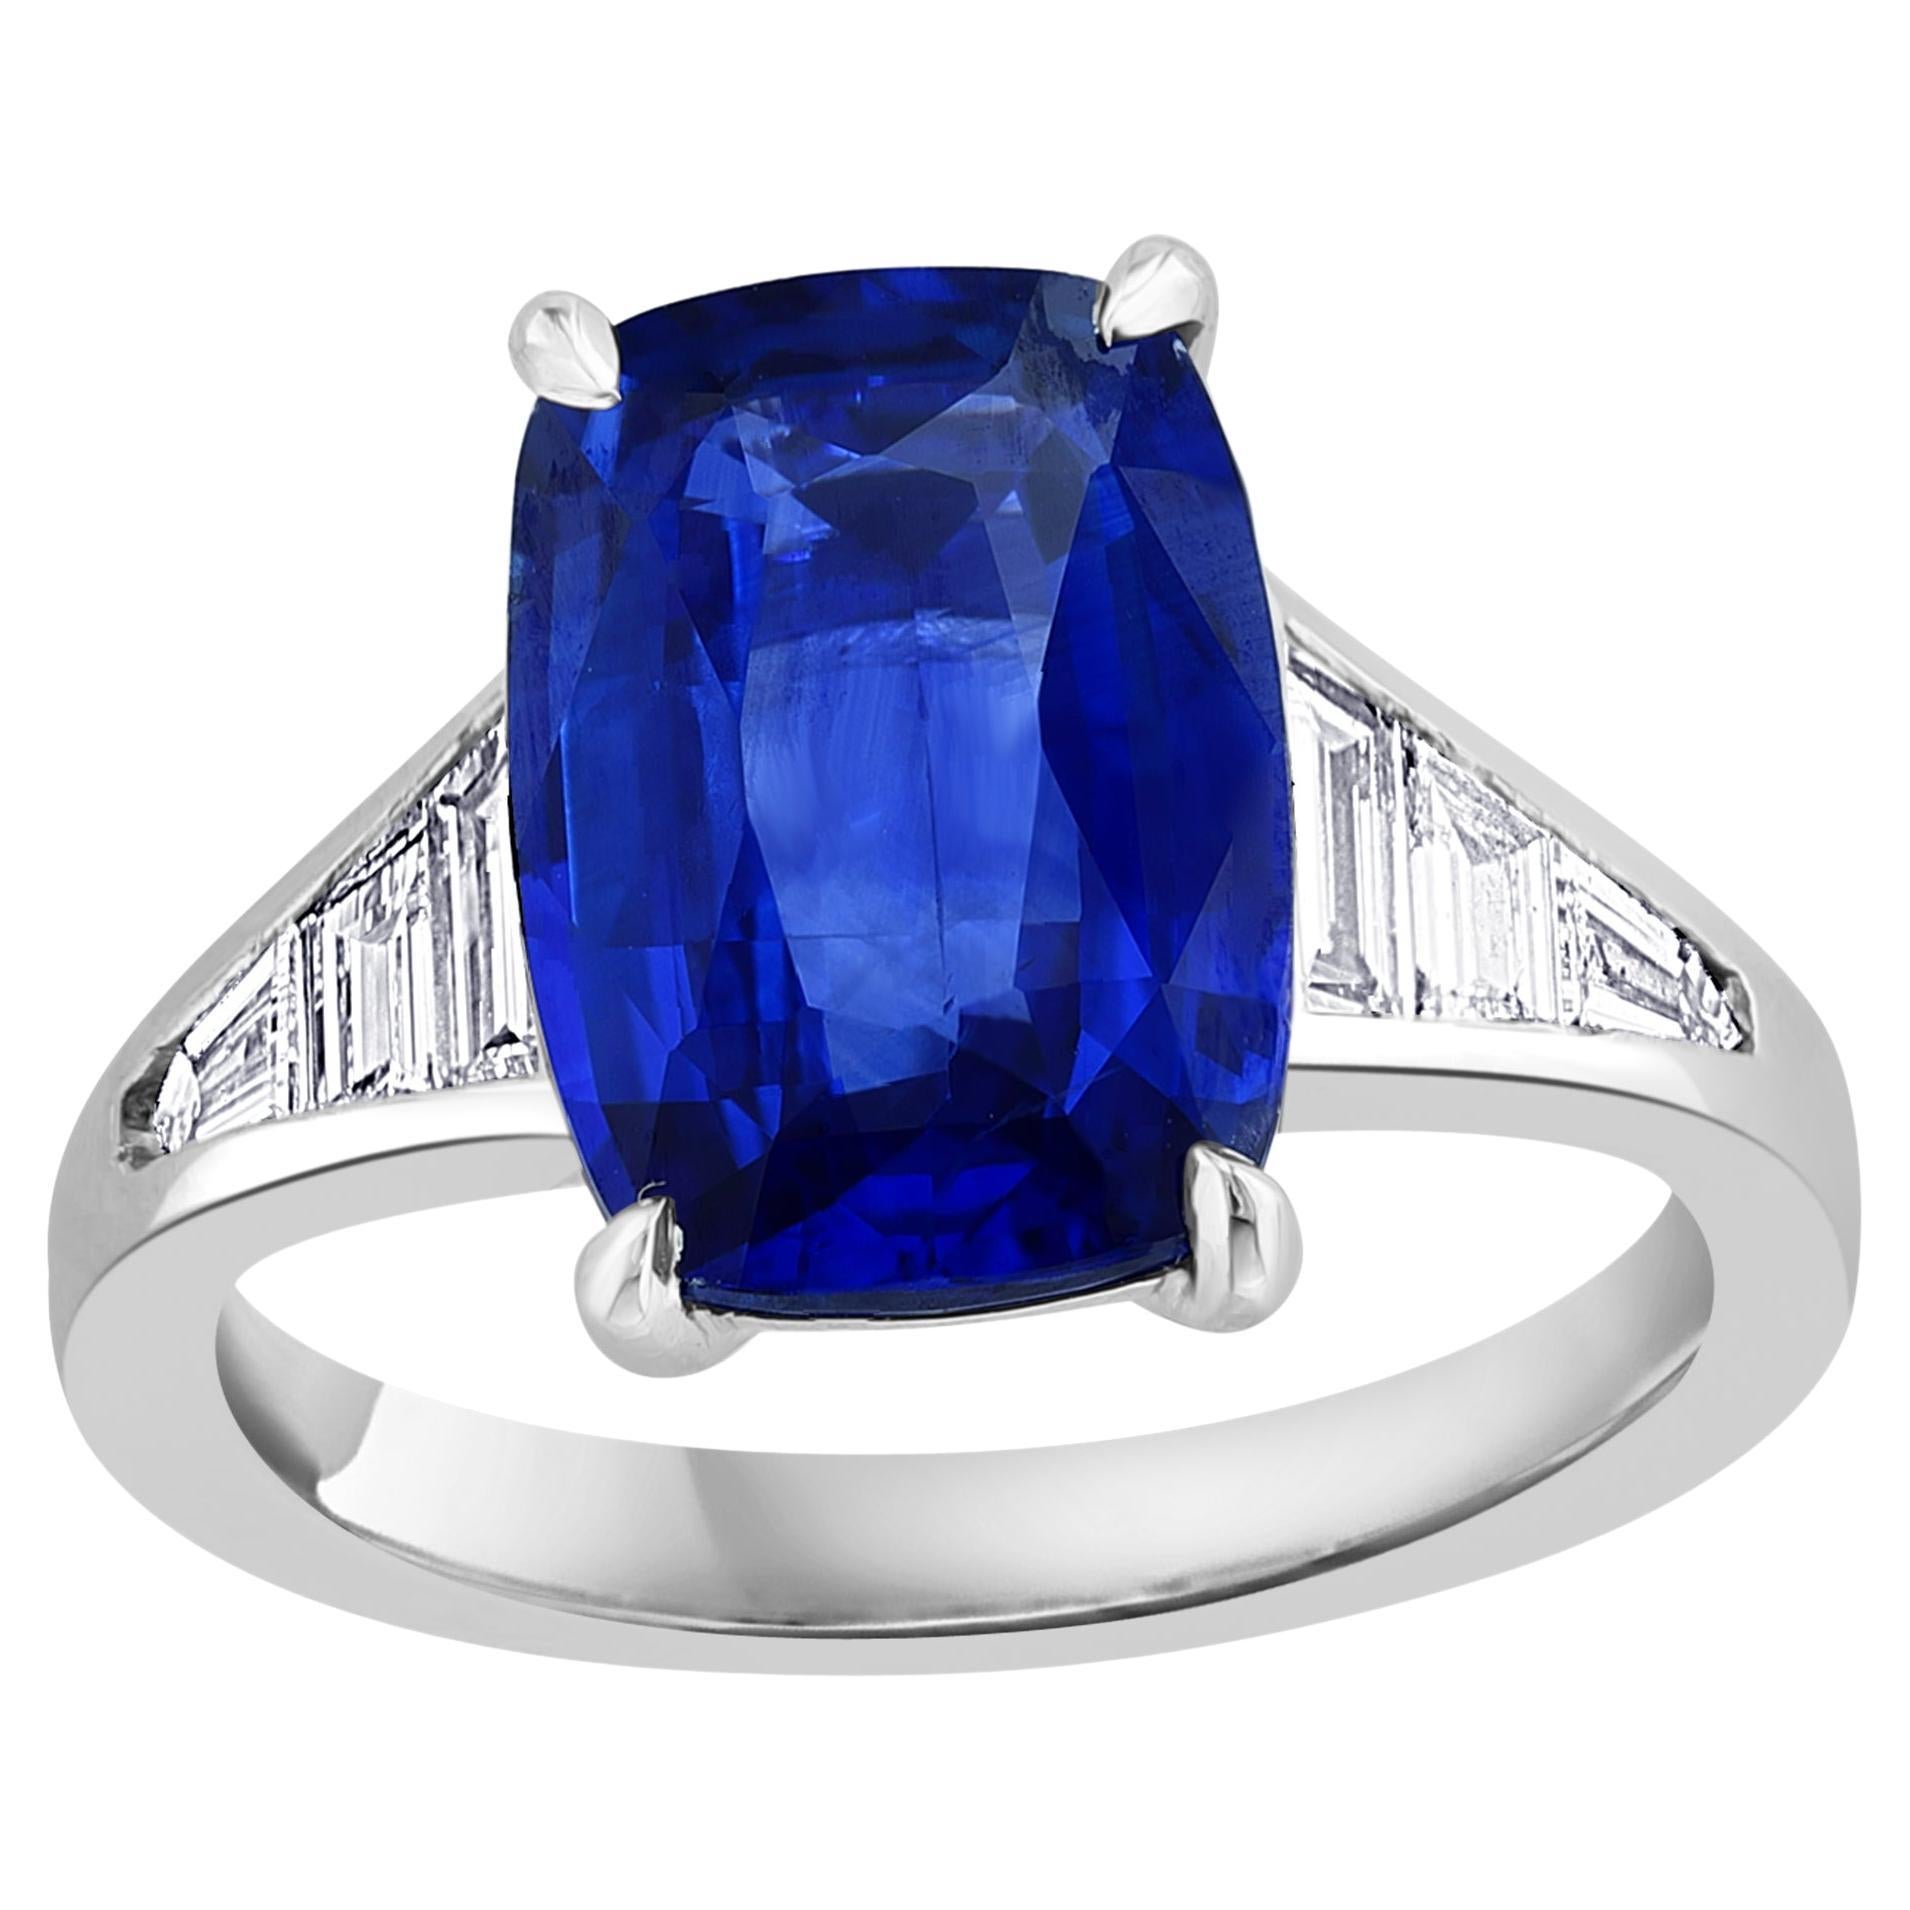 4.50 Carat Cushion Cut Sapphire and Diamond Engagement Ring in Platinum